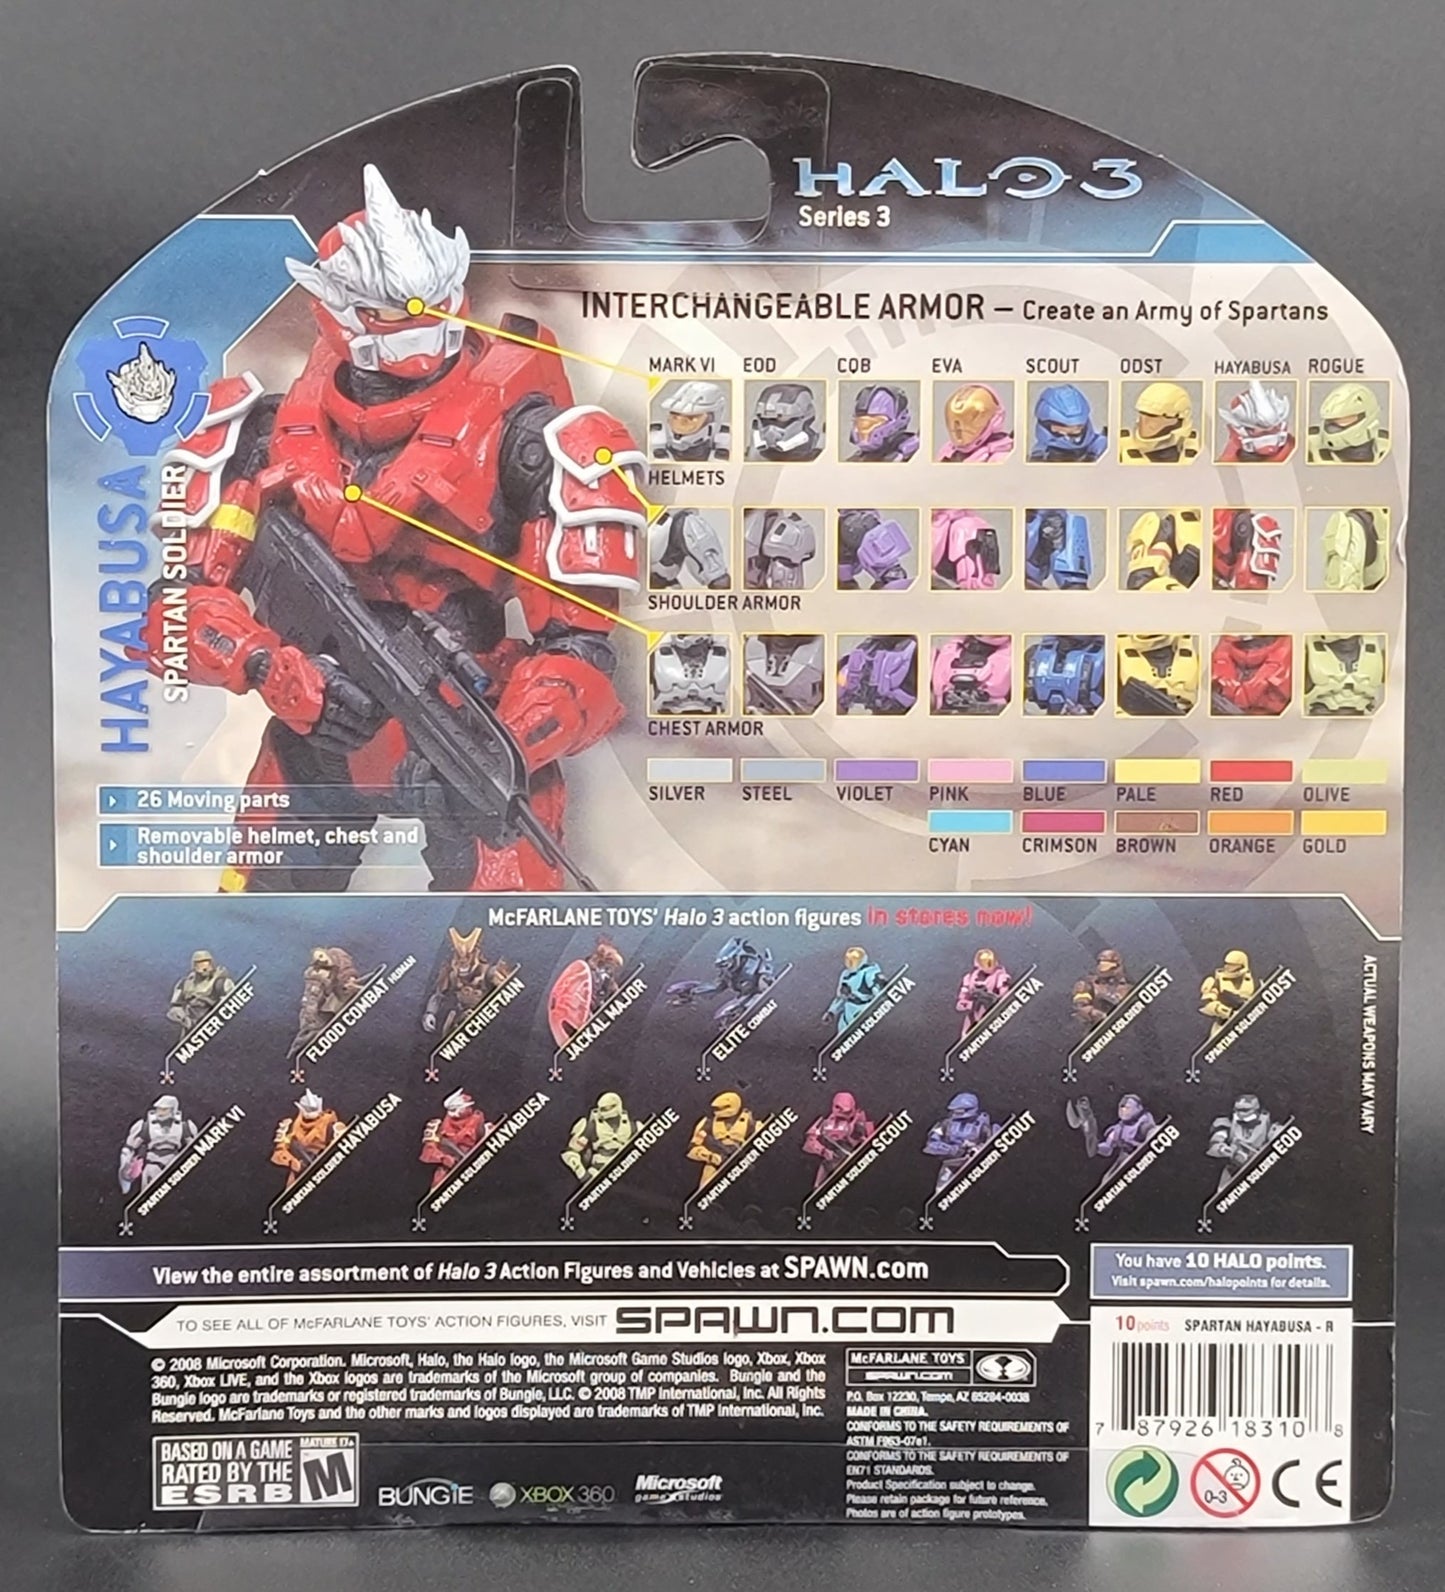 Spartan Soldier Hayabusa Halo 3 matchmaking series 3